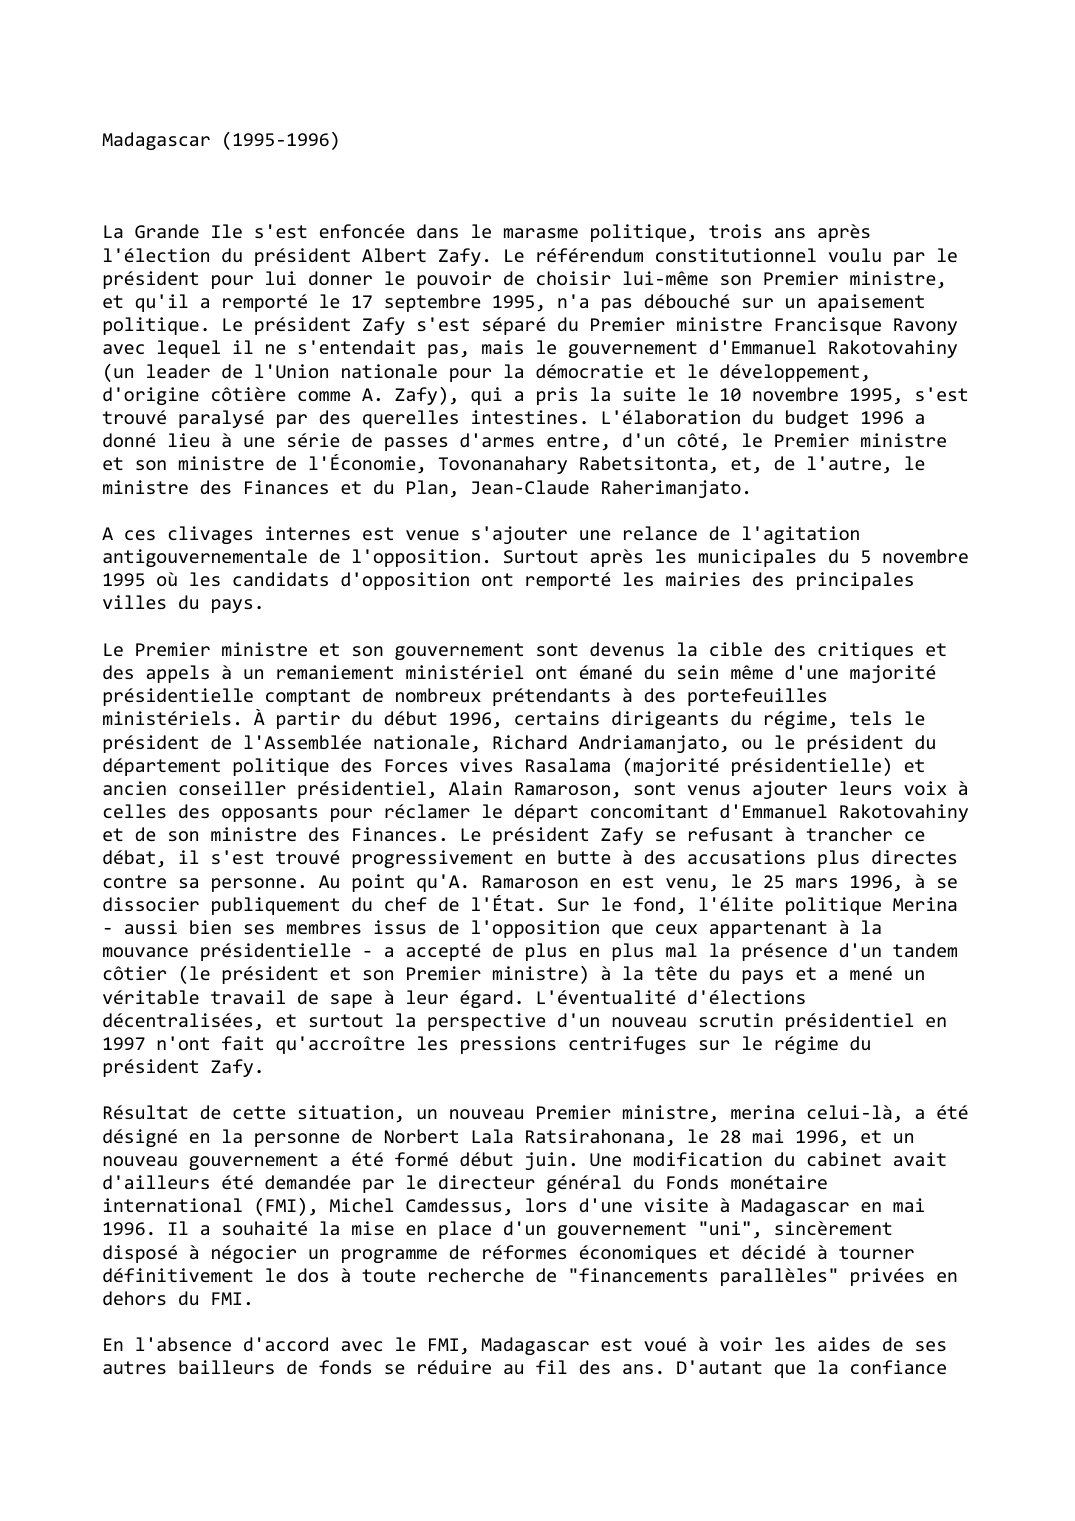 Prévisualisation du document Madagascar (1995-1996)